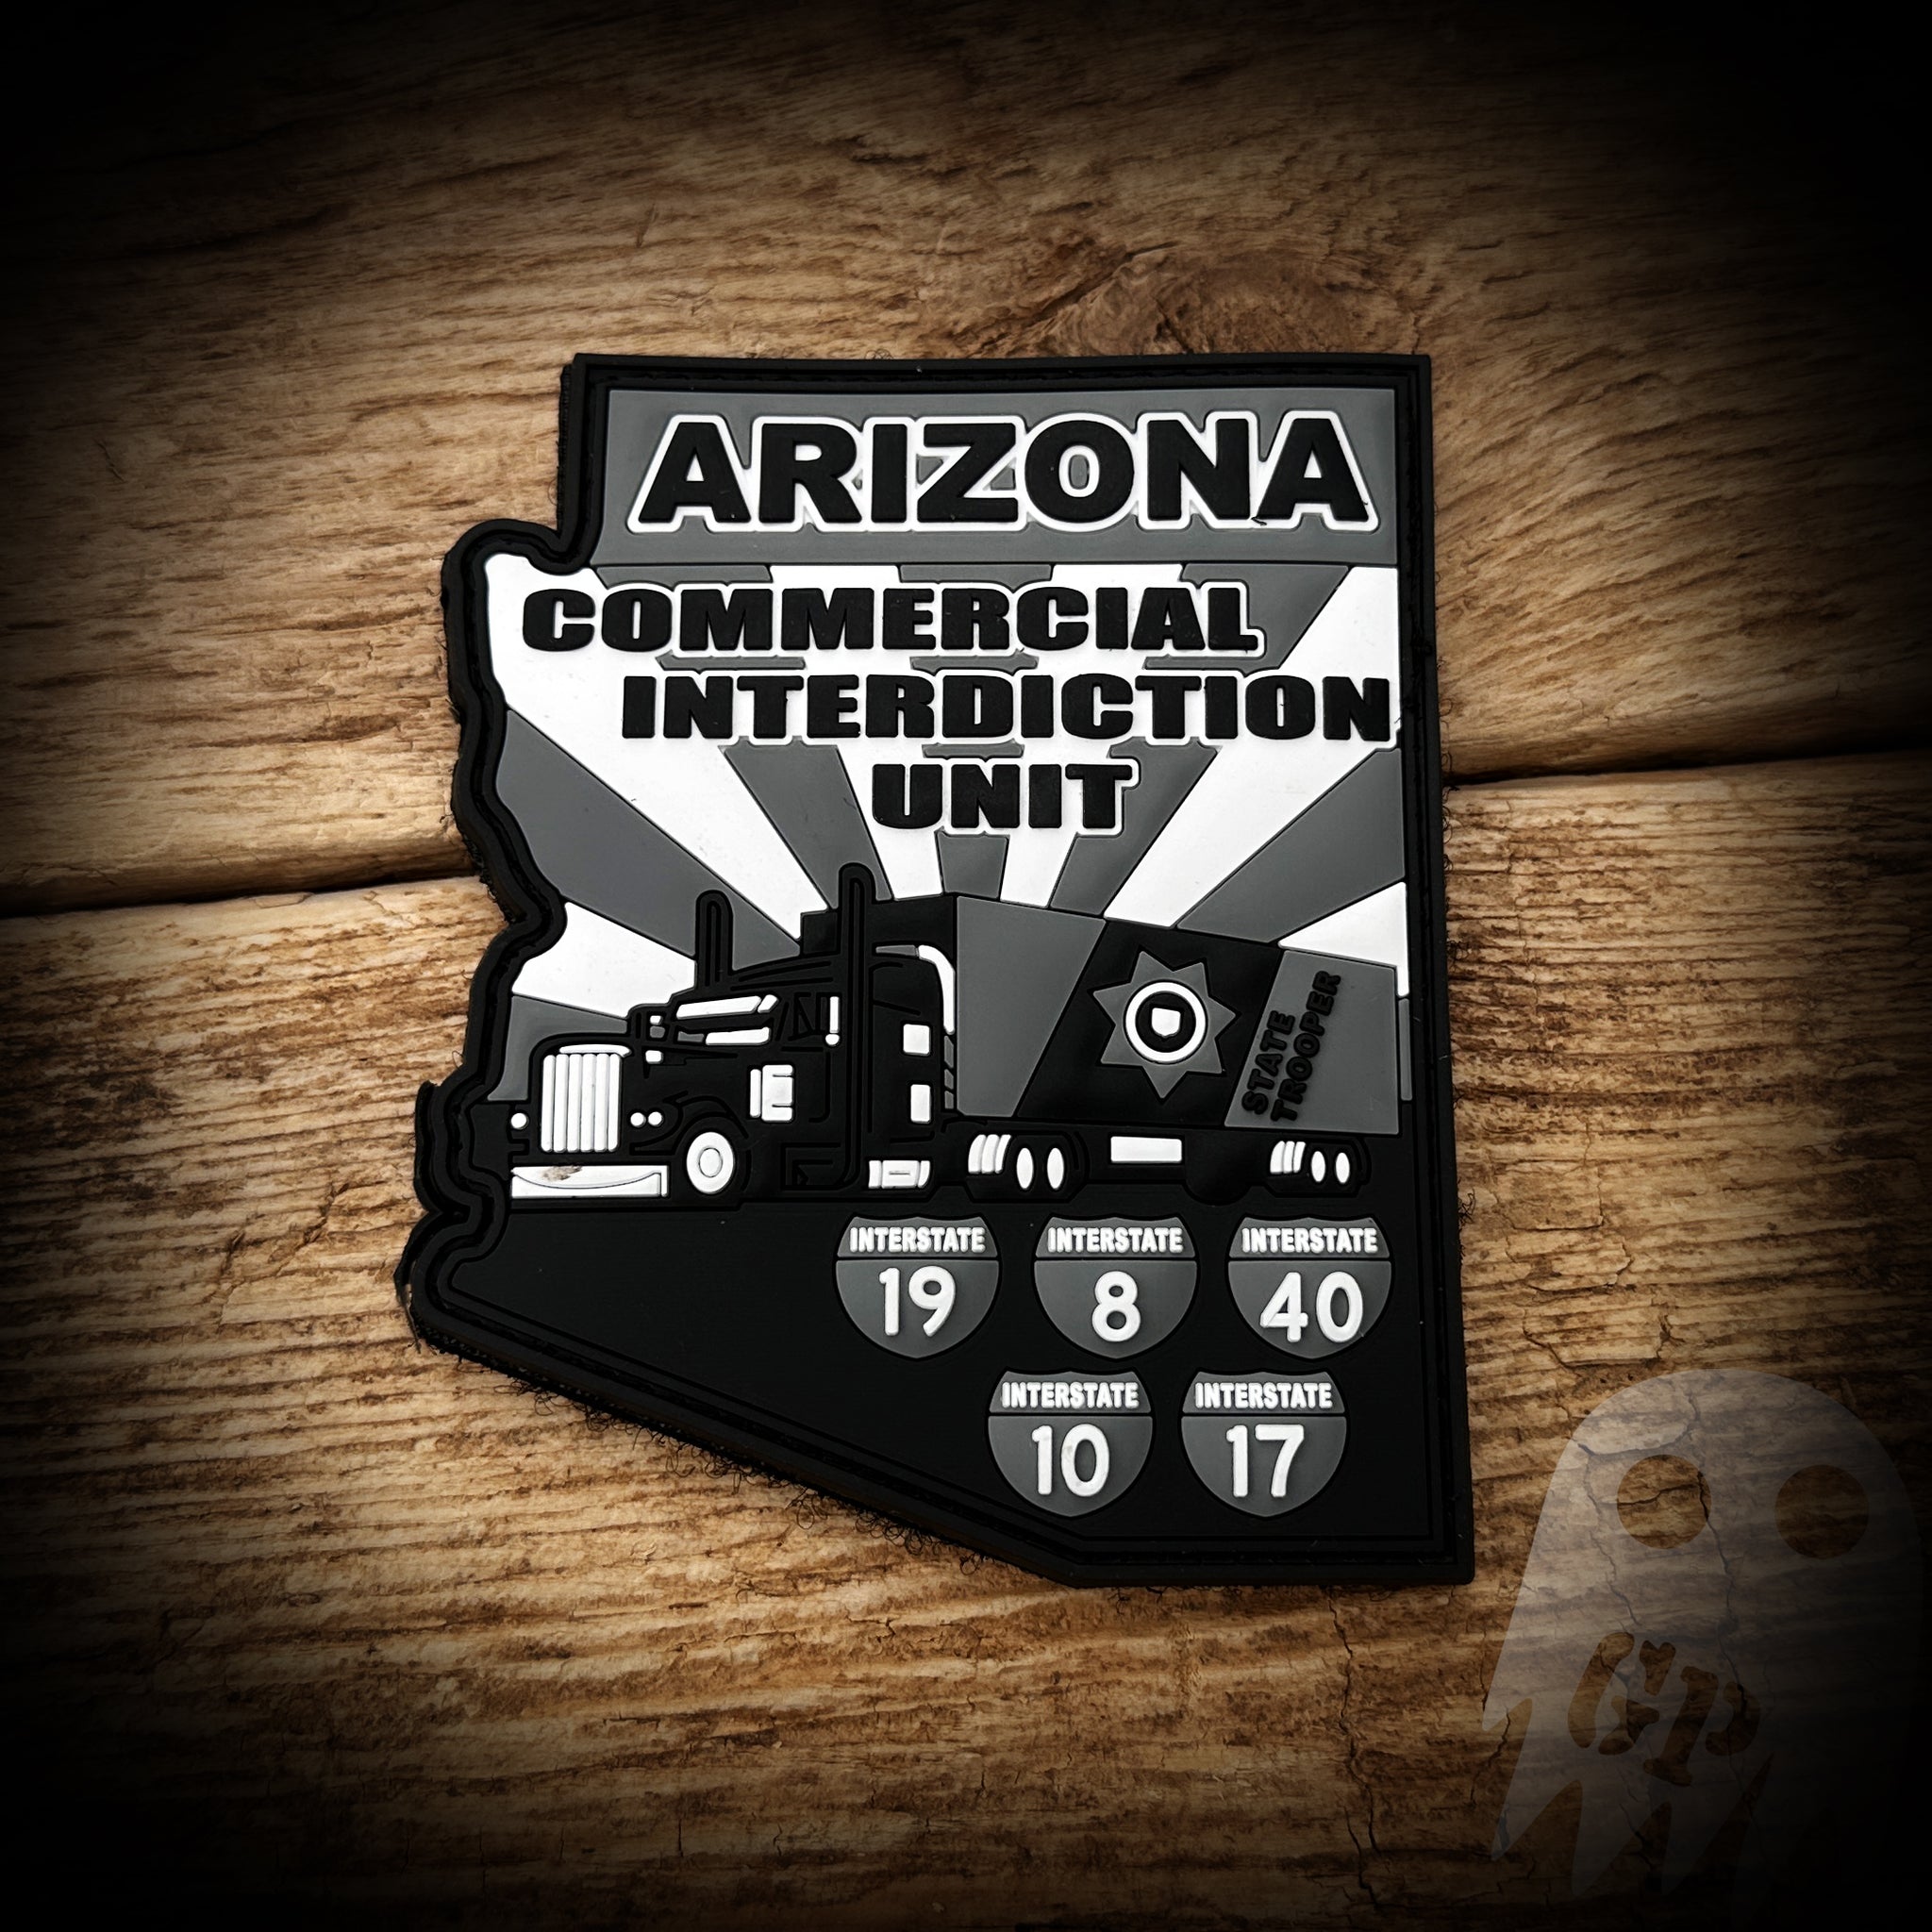 Arizona Commercial Interdiction Unit - Arizona Dept of Public Safety - State Trooper - INVESTIGATING